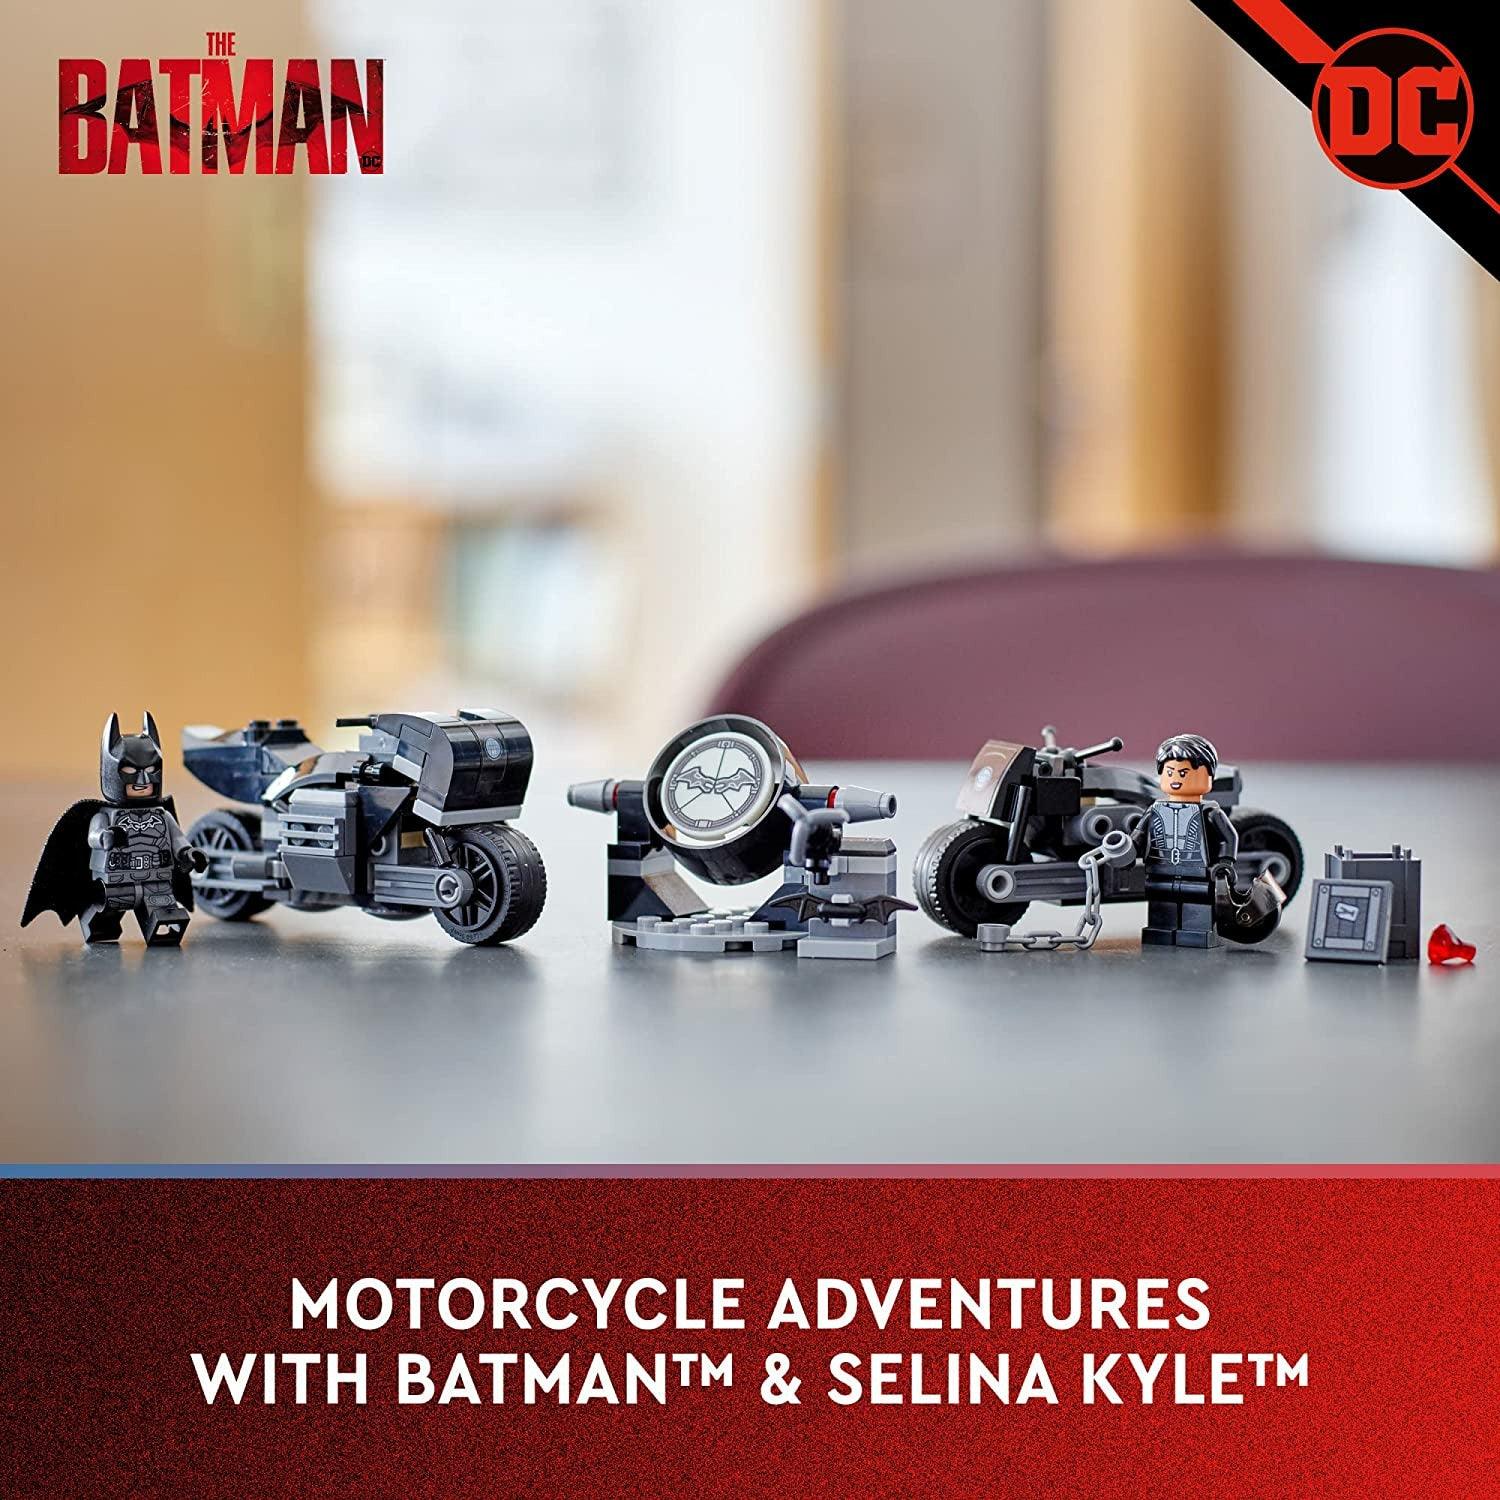 LEGO DC Batman: Batman & Selina Kyle Motorcycle Pursuit 76179 Building Kit (149 Pieces) - BumbleToys - 5-7 Years, Batman, Boys, DC, LEGO, OXE, Pre-Order